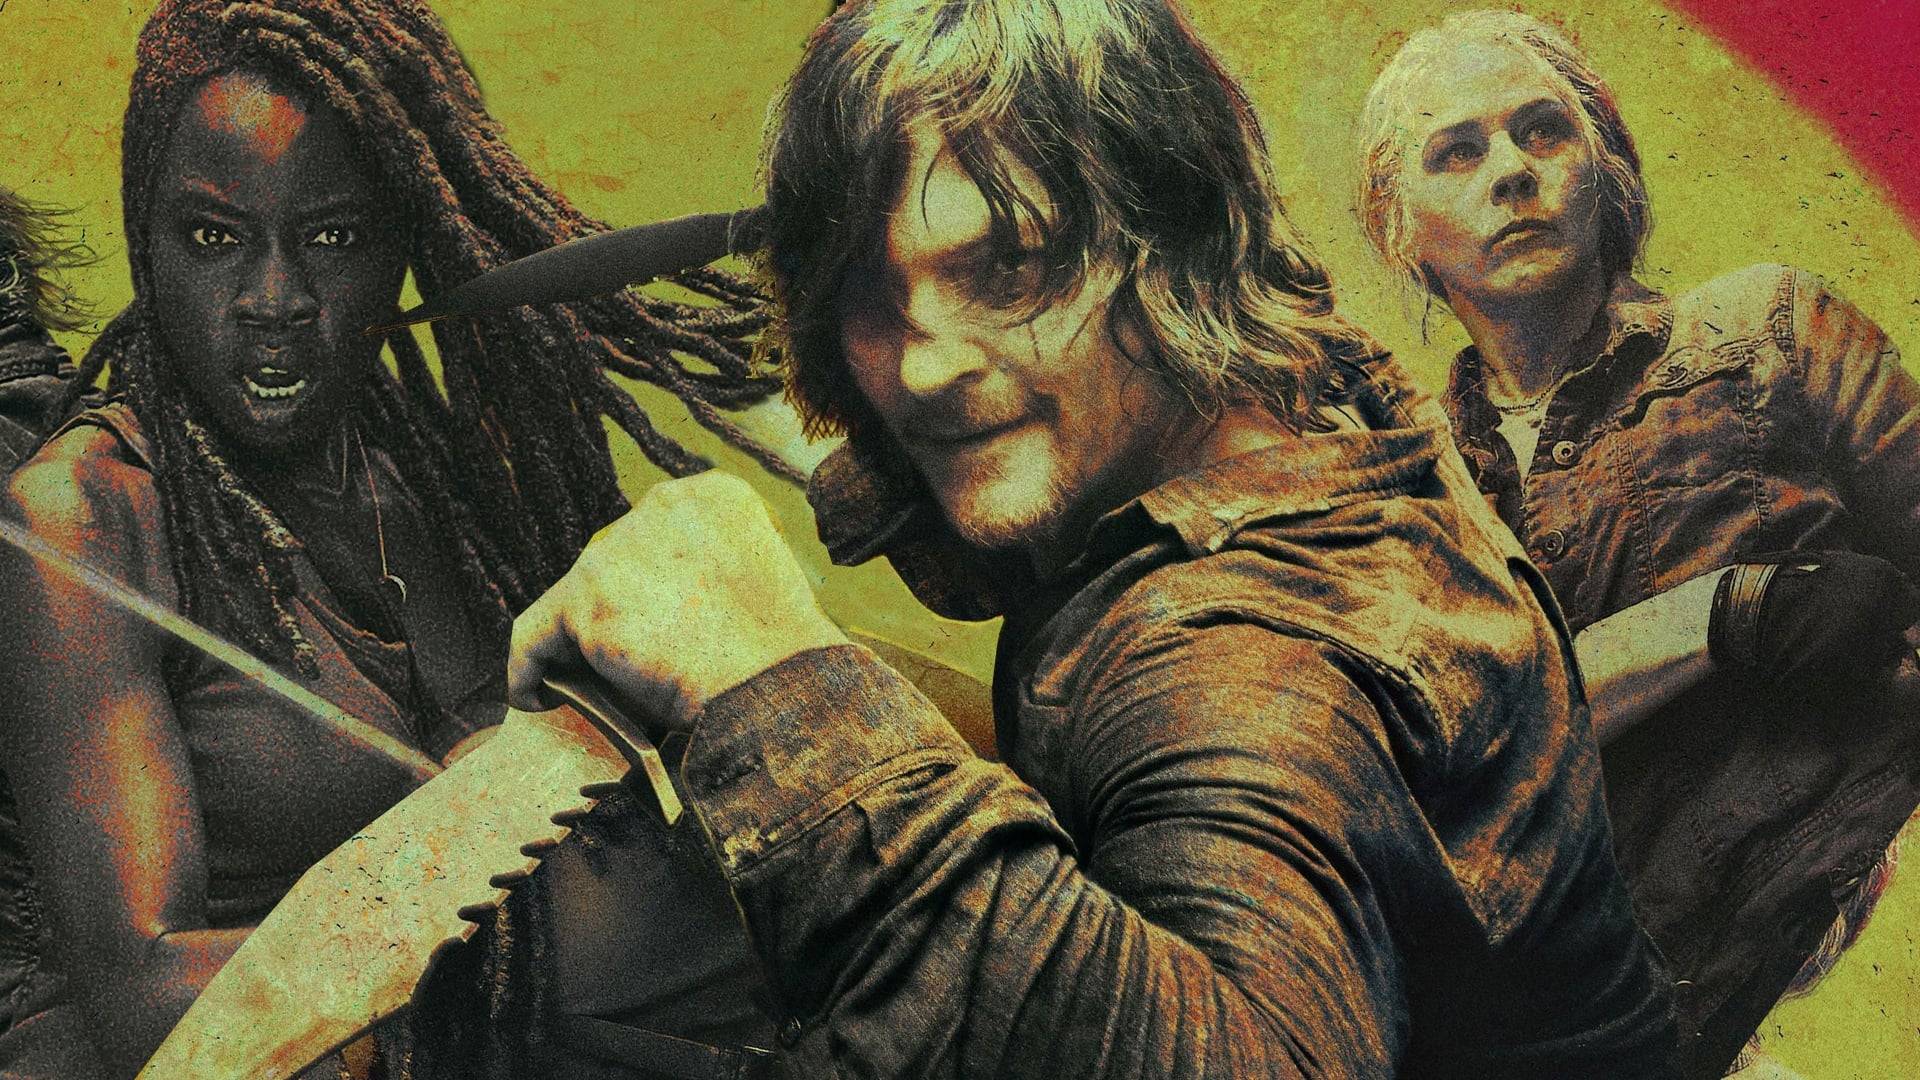 Fox Premium promove maratonas de ‘The Walking Dead’